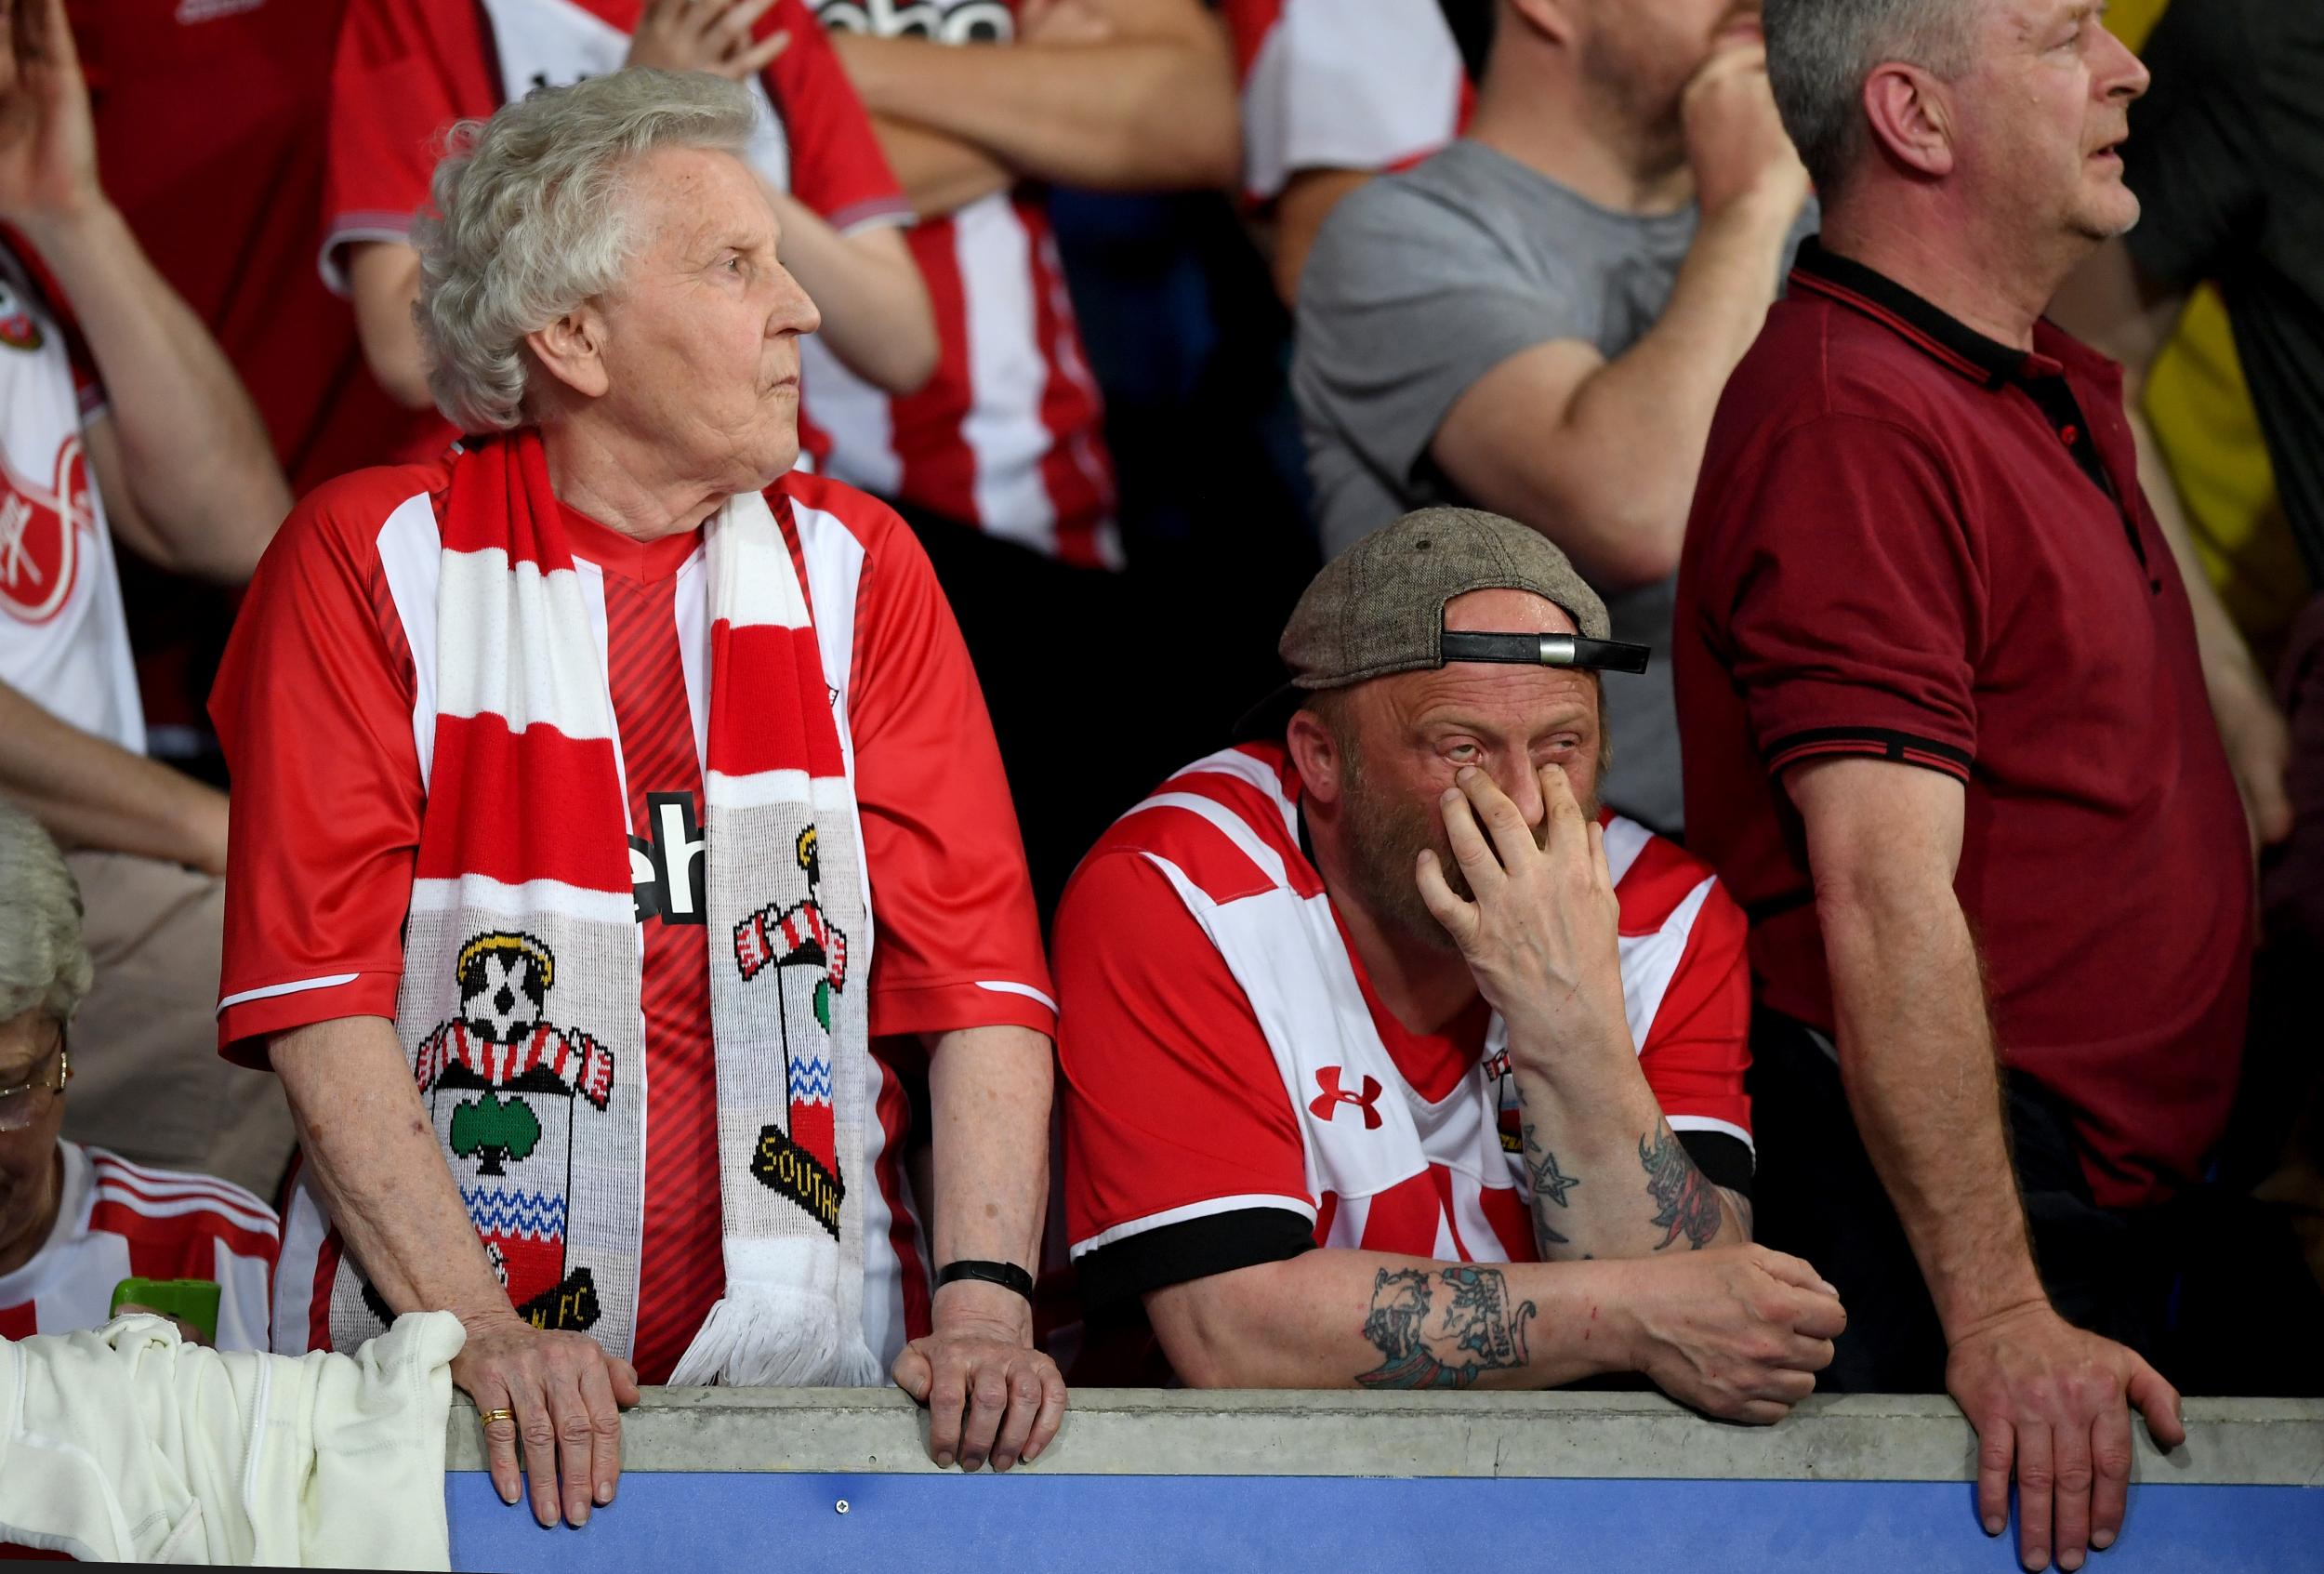 &#13;
Southampton fans look on &#13;